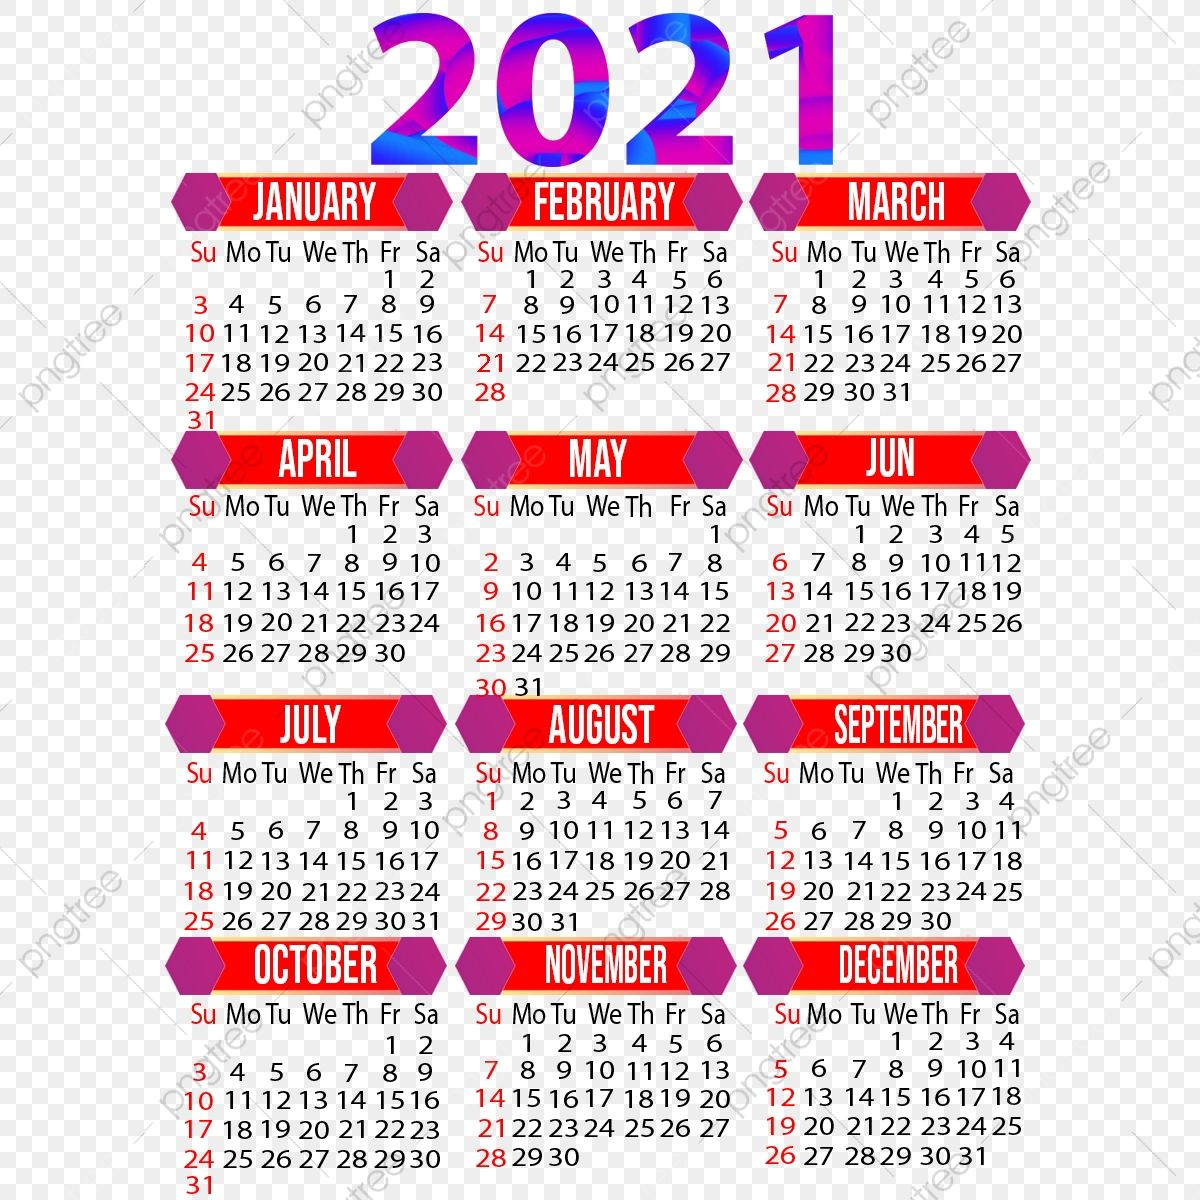 Year 2021 Creative Calendar Design 2021 2021 Calendar